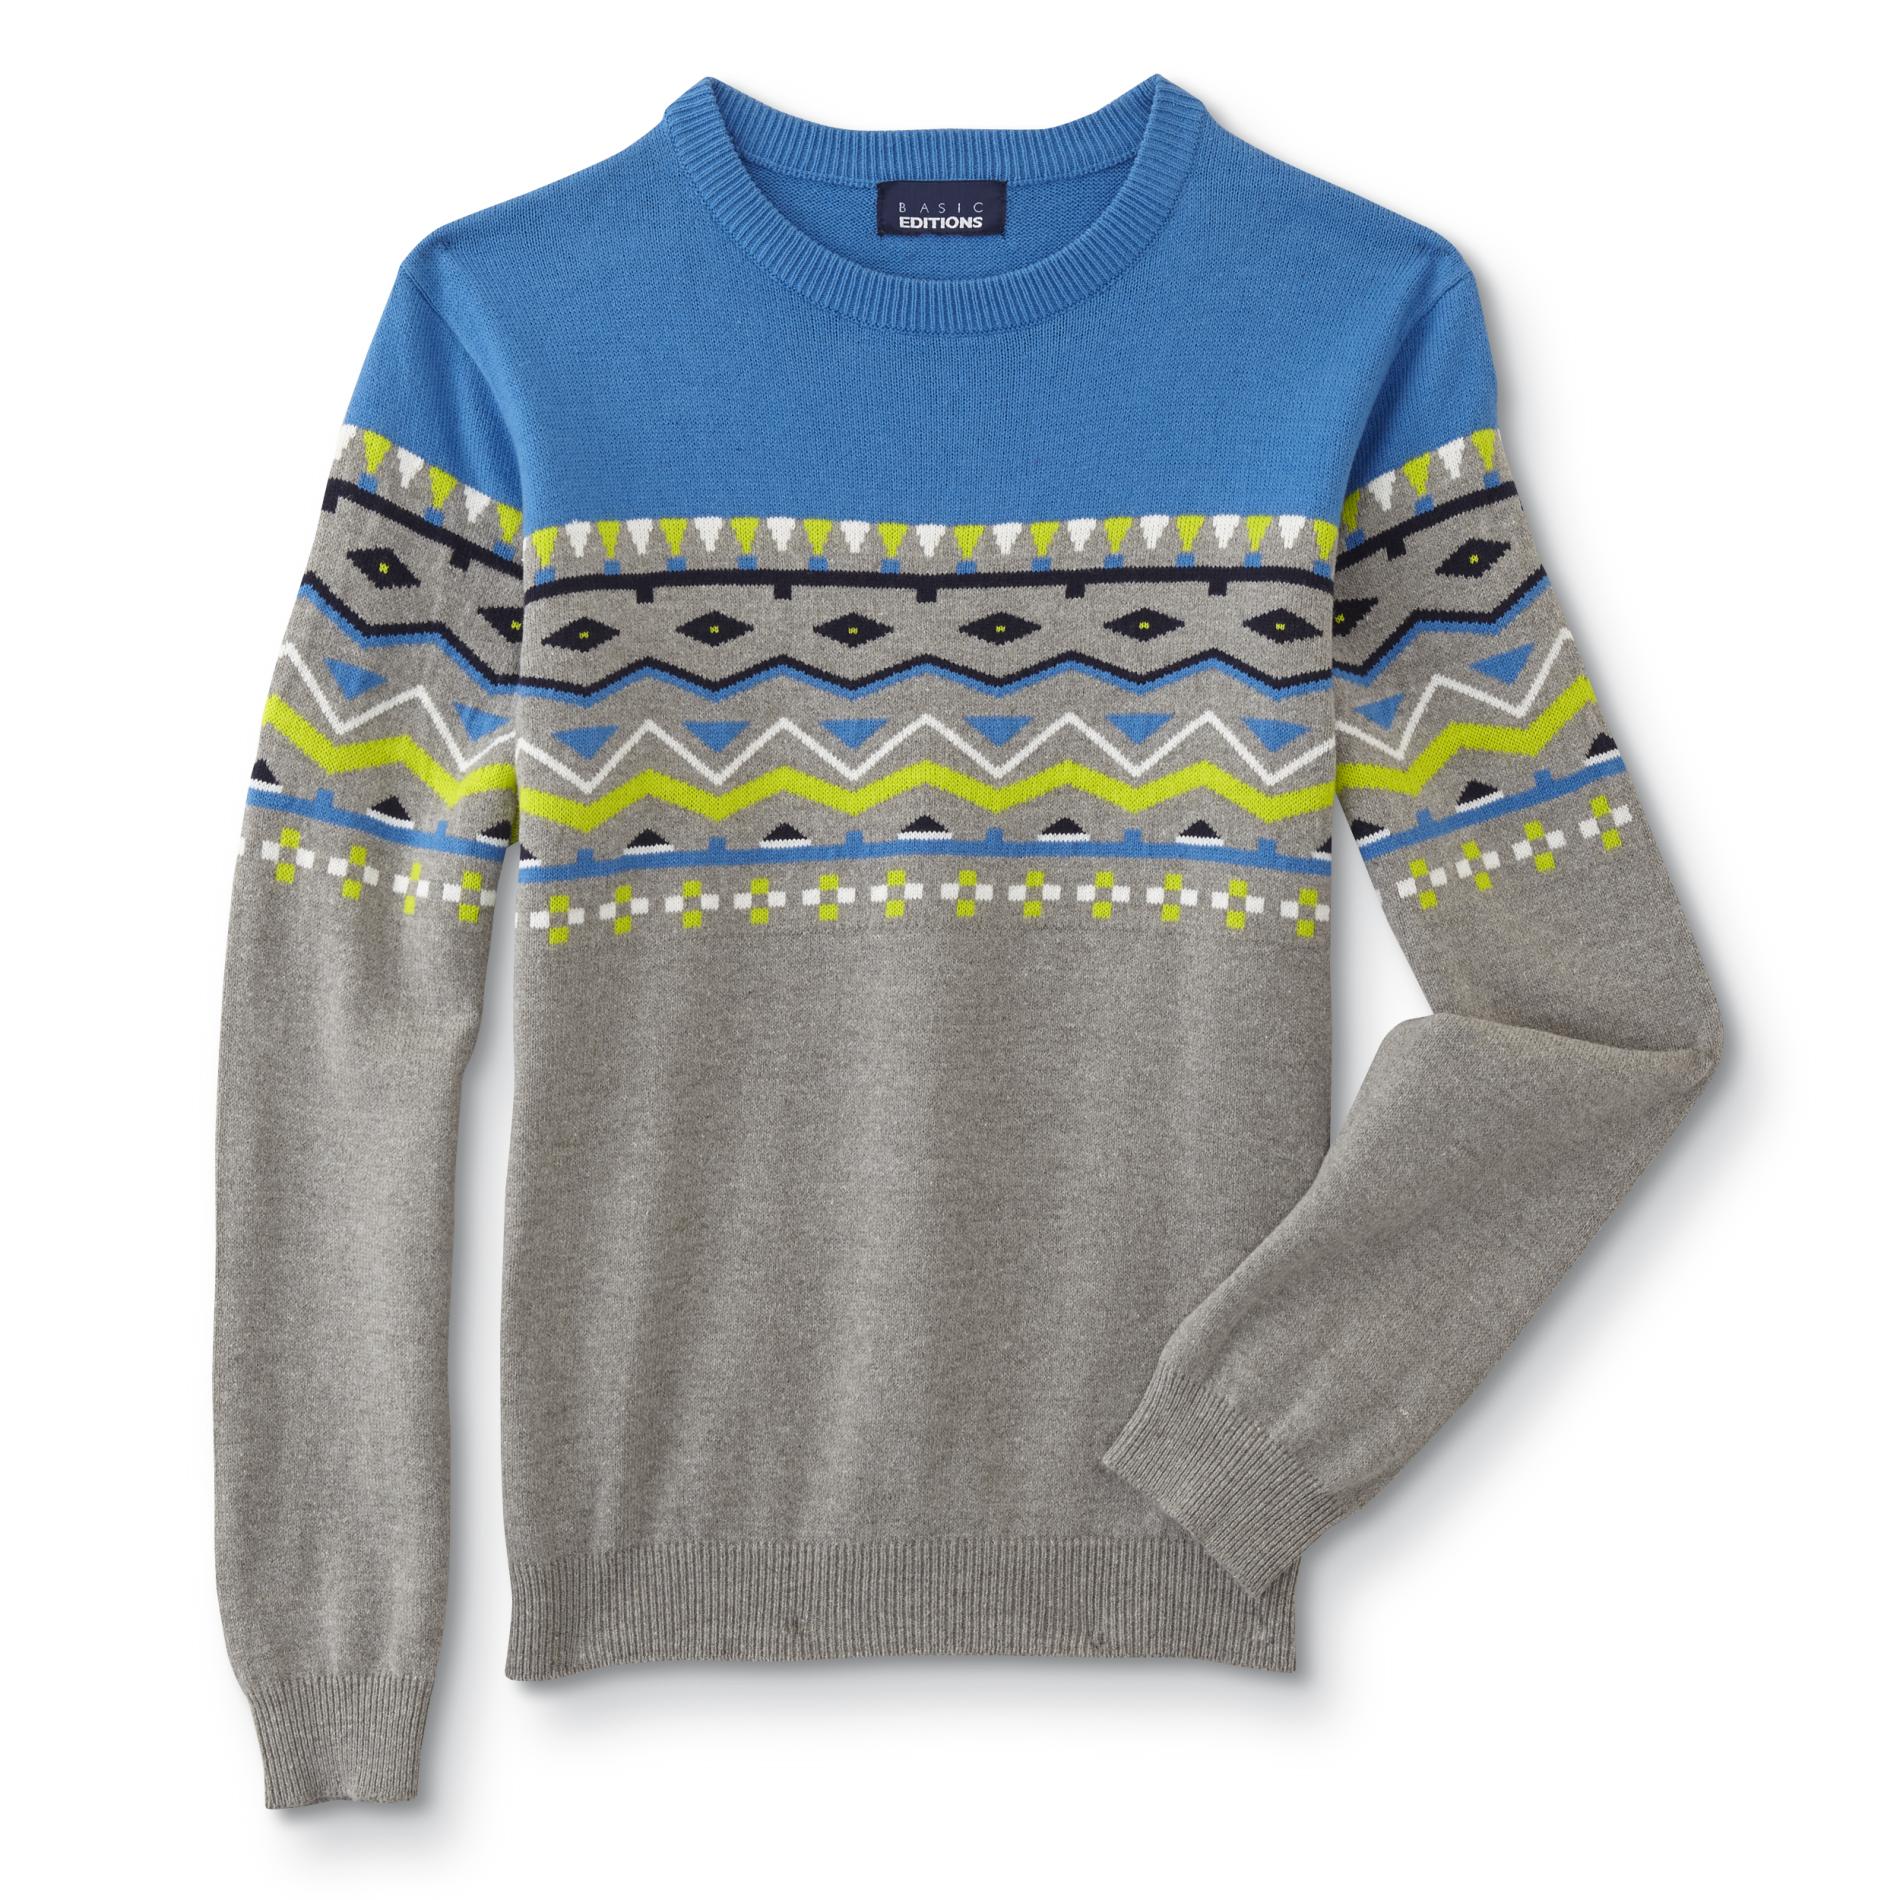 Basic Editions Boys' Crew Neck Sweater - Fair Isle